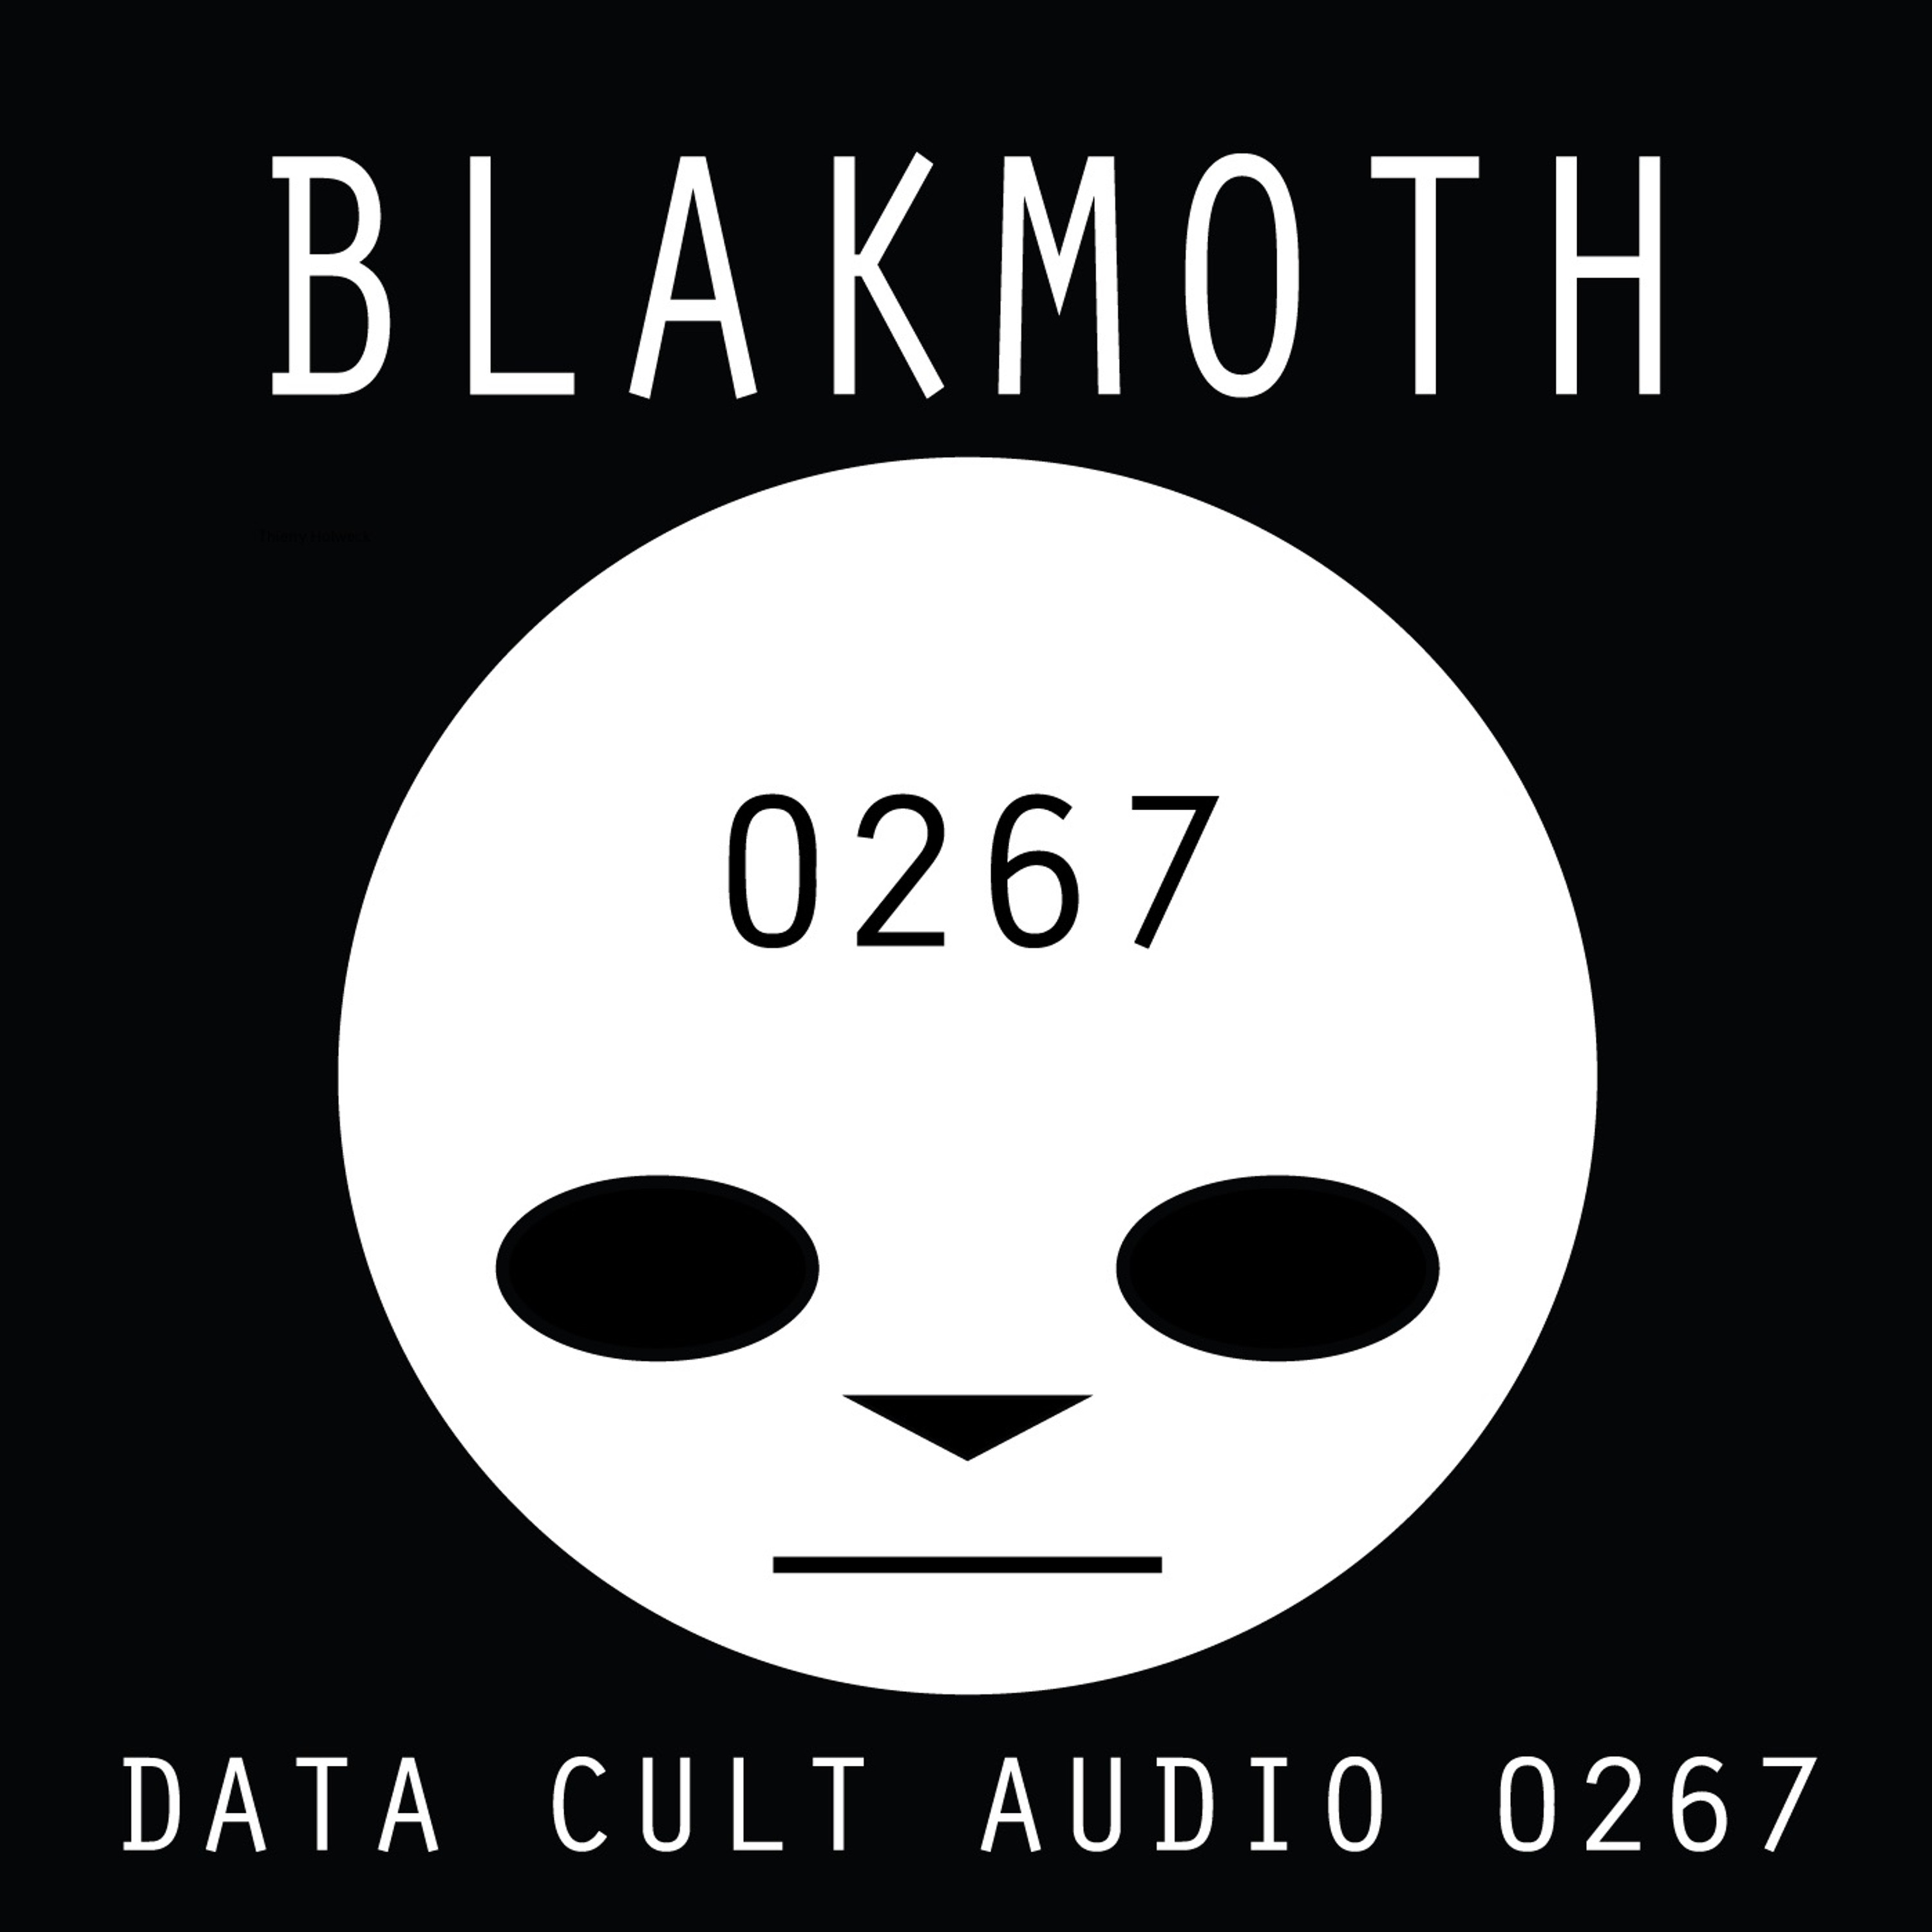 Data Cult Audio 0267 - Blakmoth